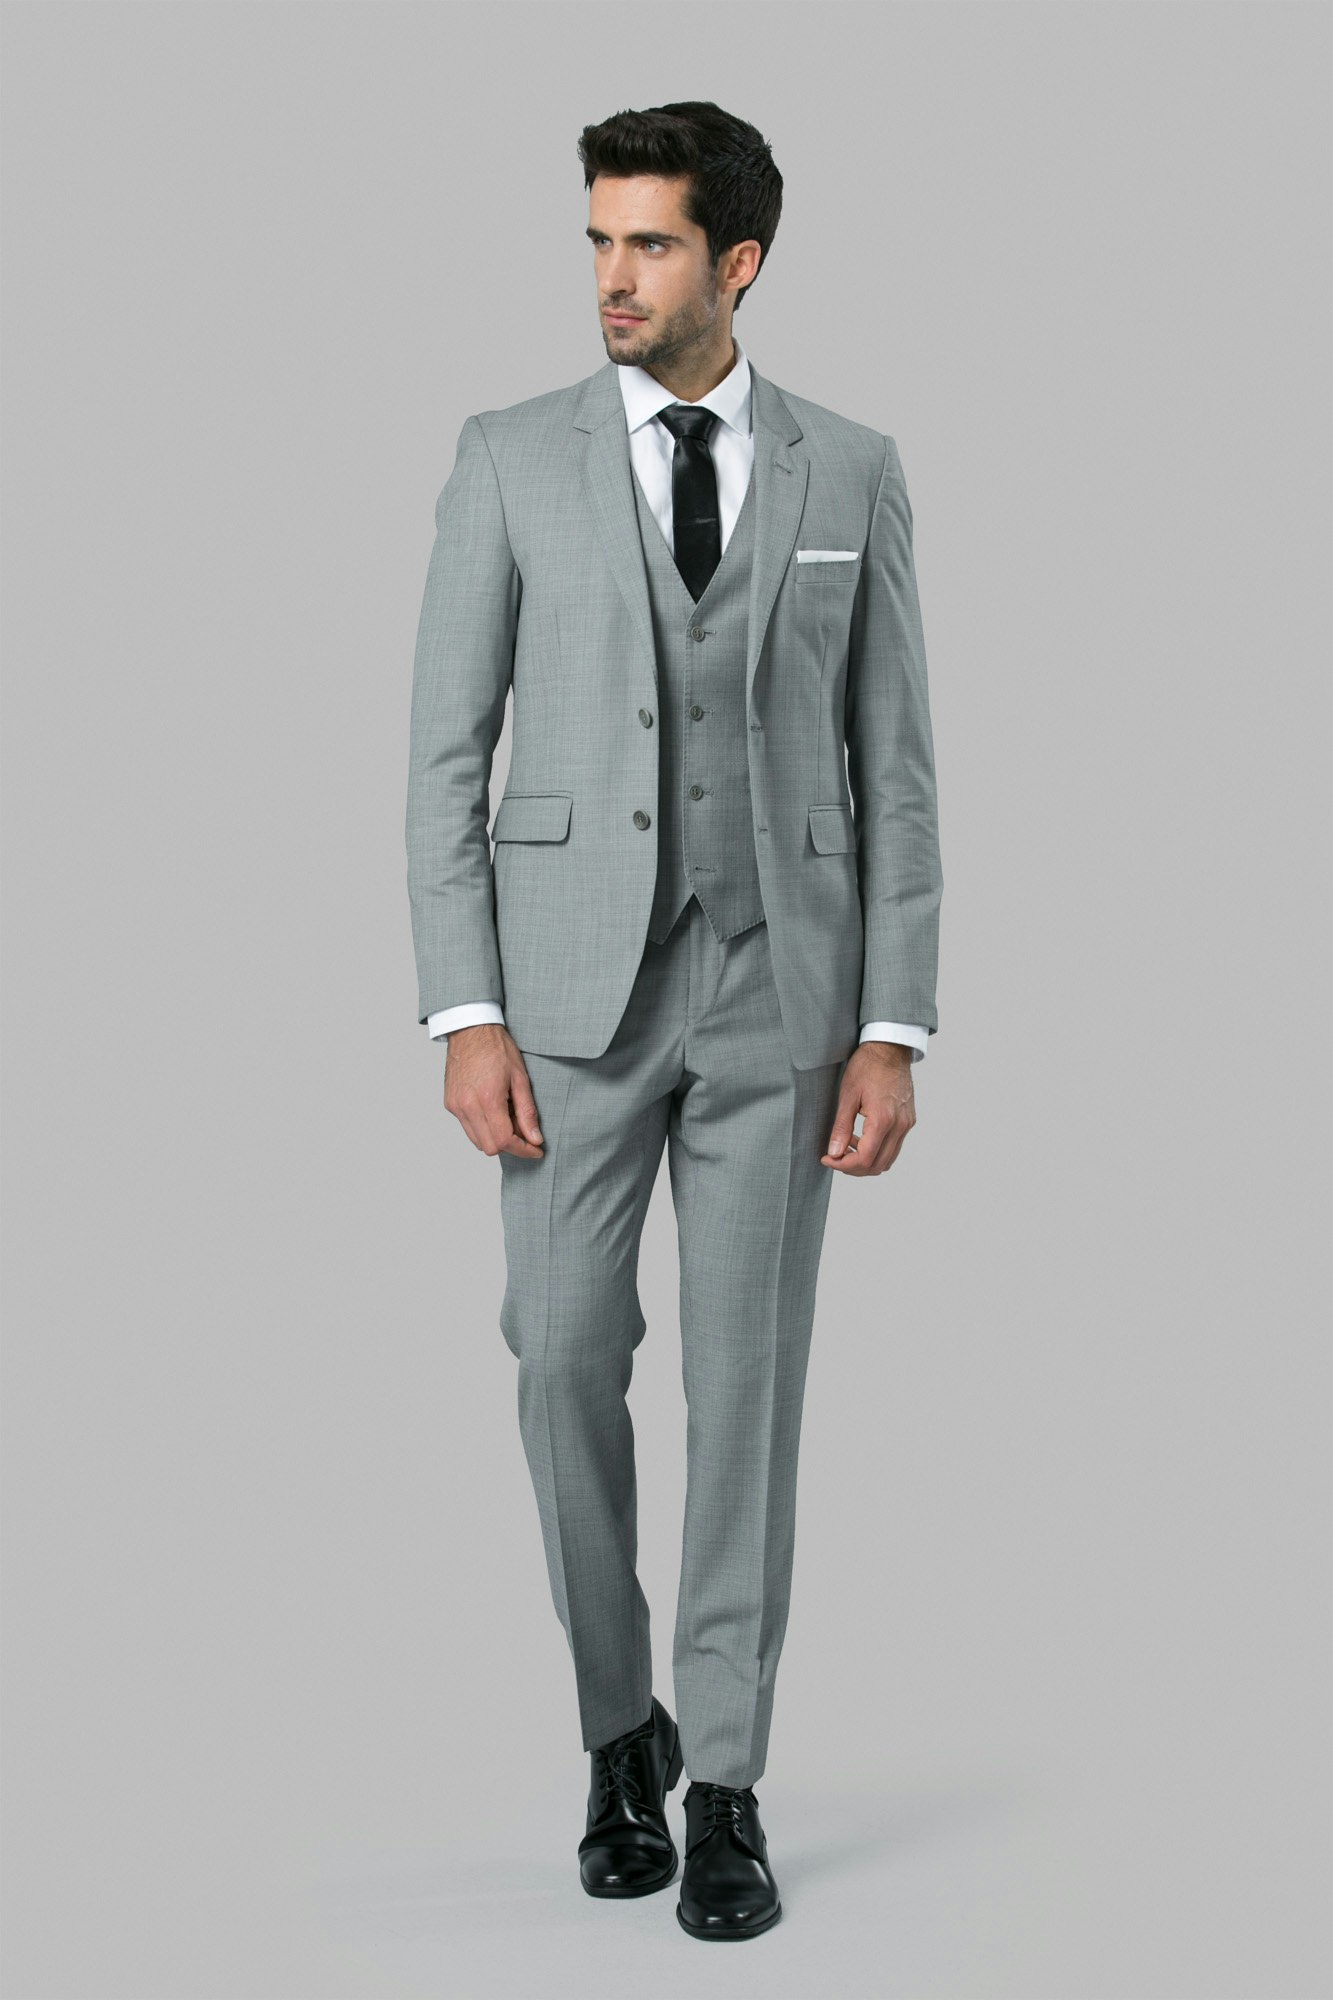 Get-Ups for the Groom: Our Favorite Suits with a Pop of Color! | Light blue  suit, Blue suit men, Wedding suits men